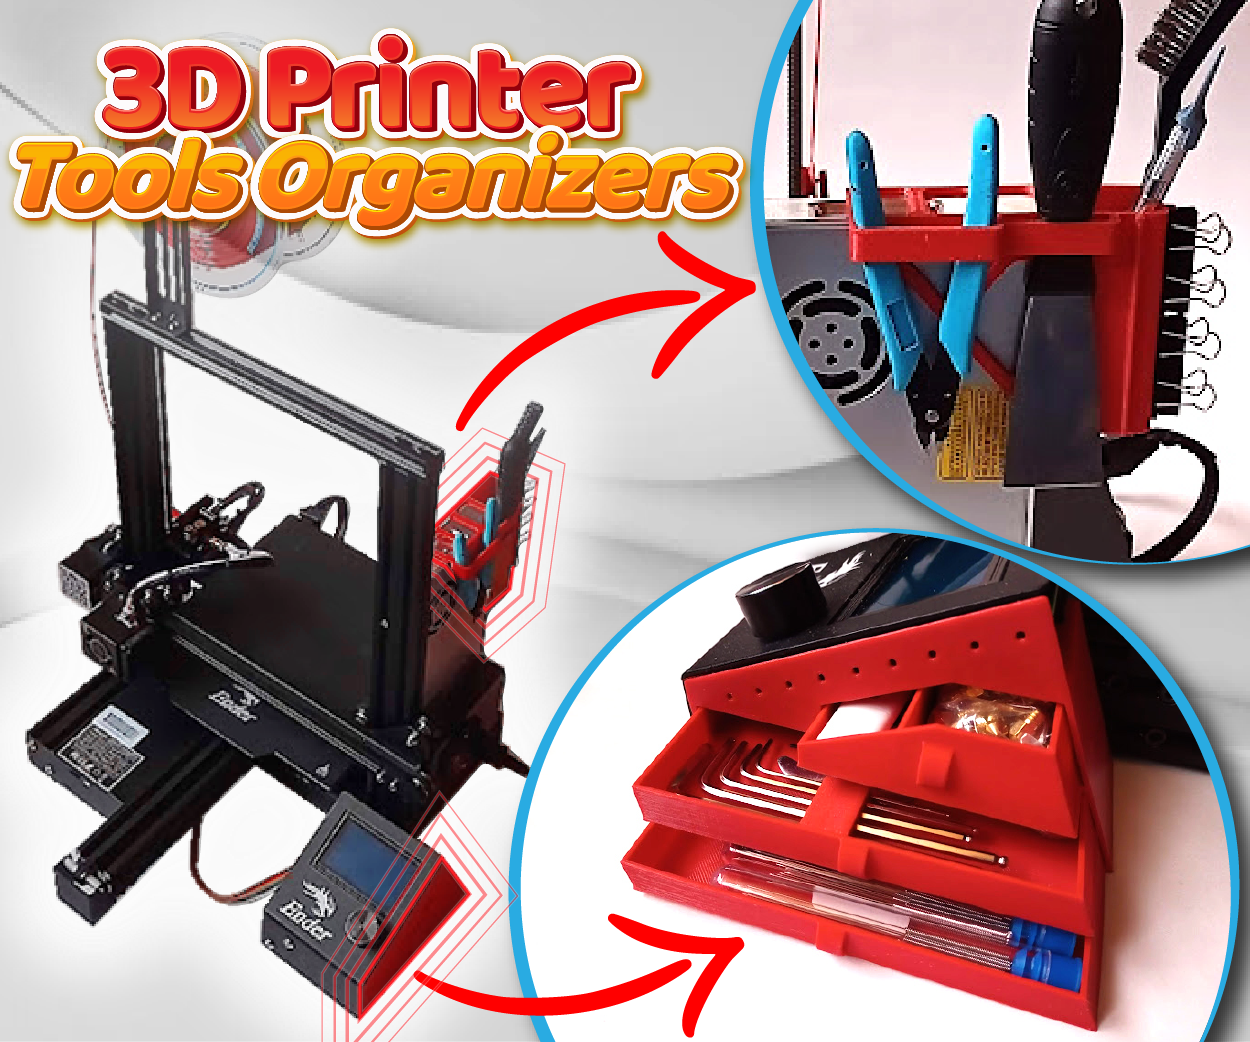 3D Printer Tools Organizers